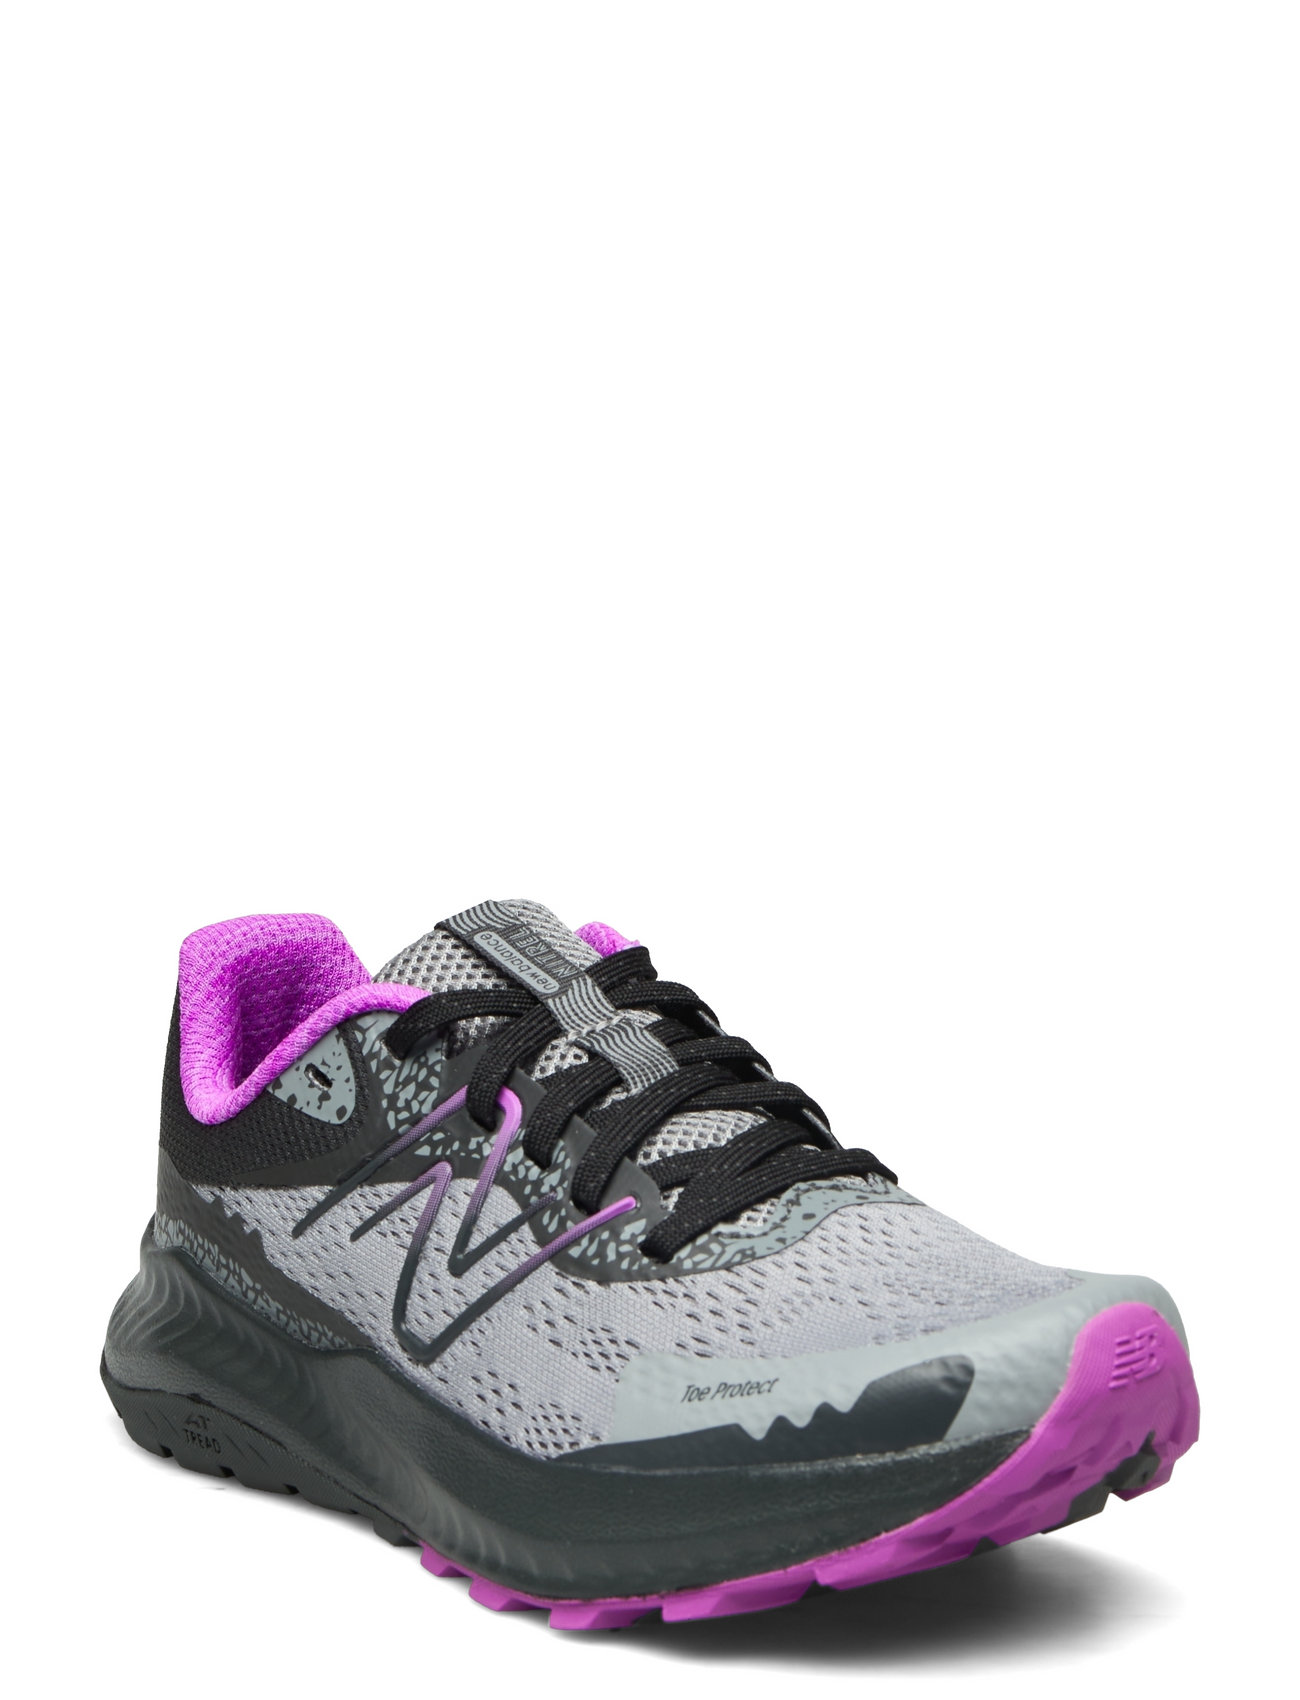 Dynasoft Nitrel V5 Sport Sport Shoes Running Shoes Grey New Balance